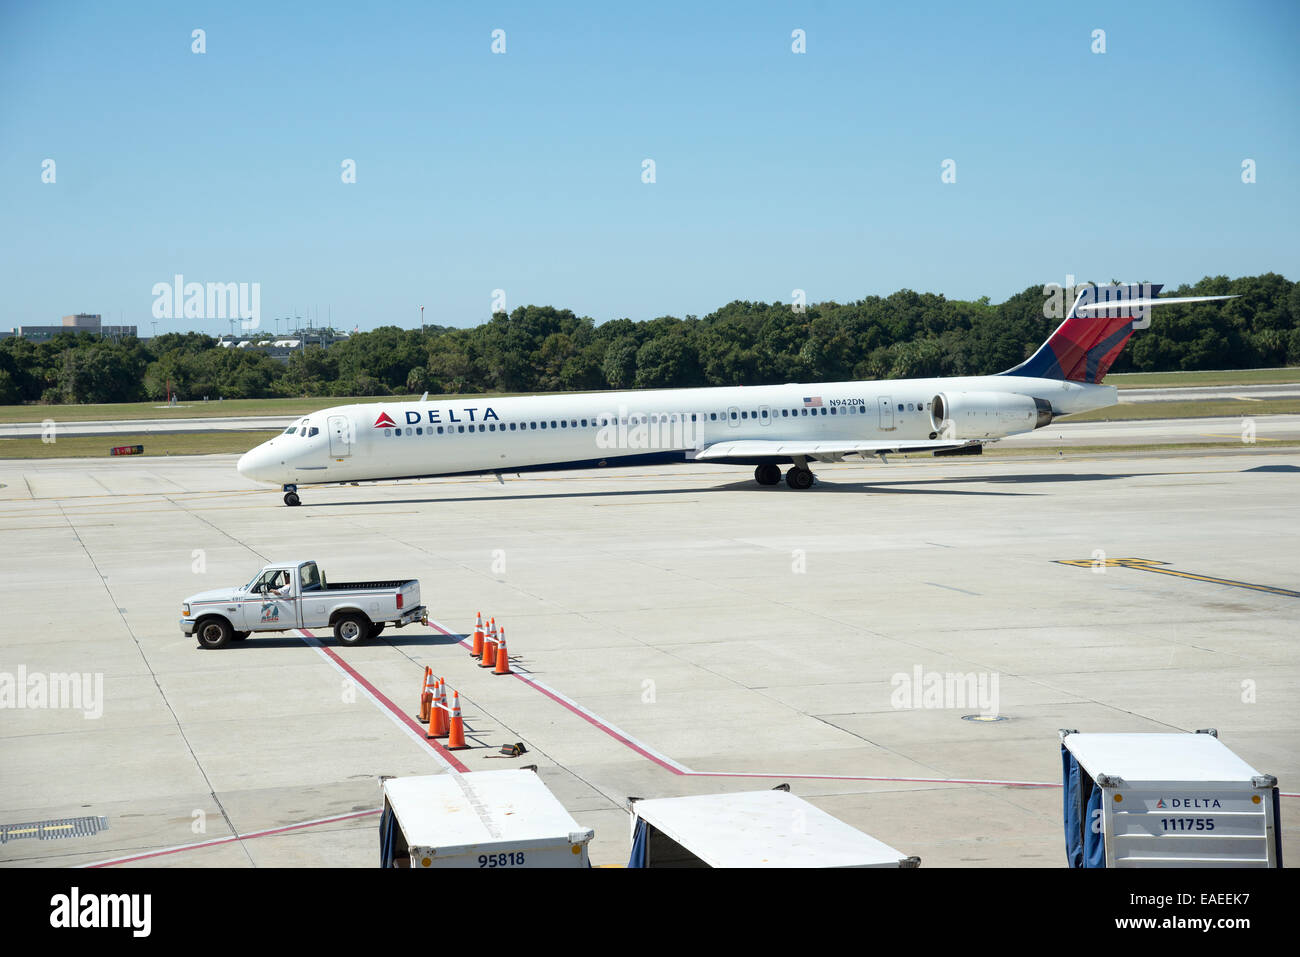 MD 90 a Delta Airways passenger jet at Tampa International Airport Florida USA Stock Photo